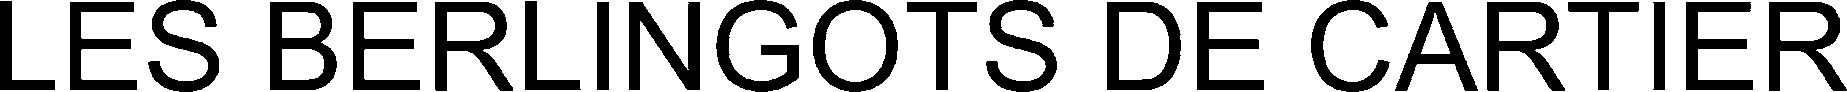 Trademark Logo LES BERLINGOTS DE CARTIER